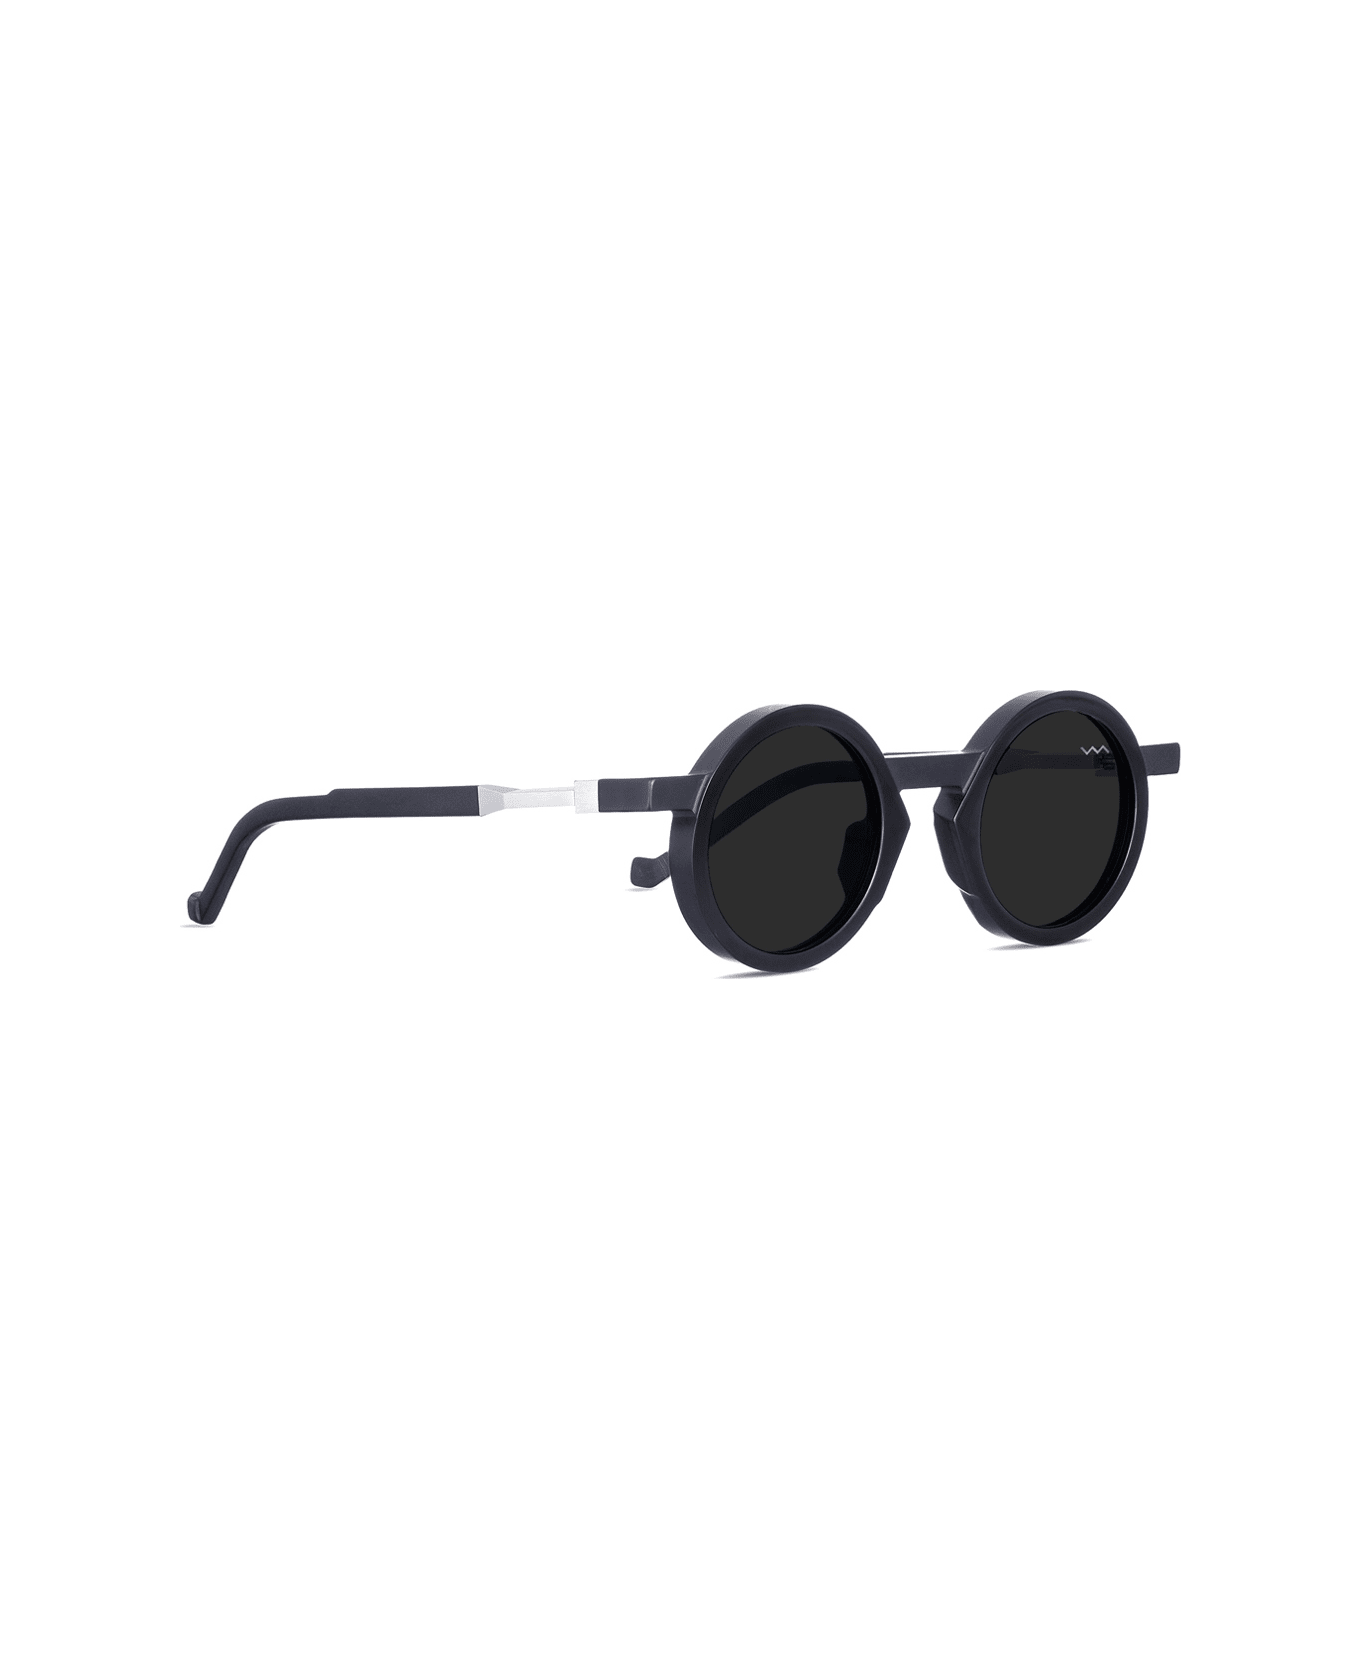 VAVA Wl0040 Black Sunglasses - Nero